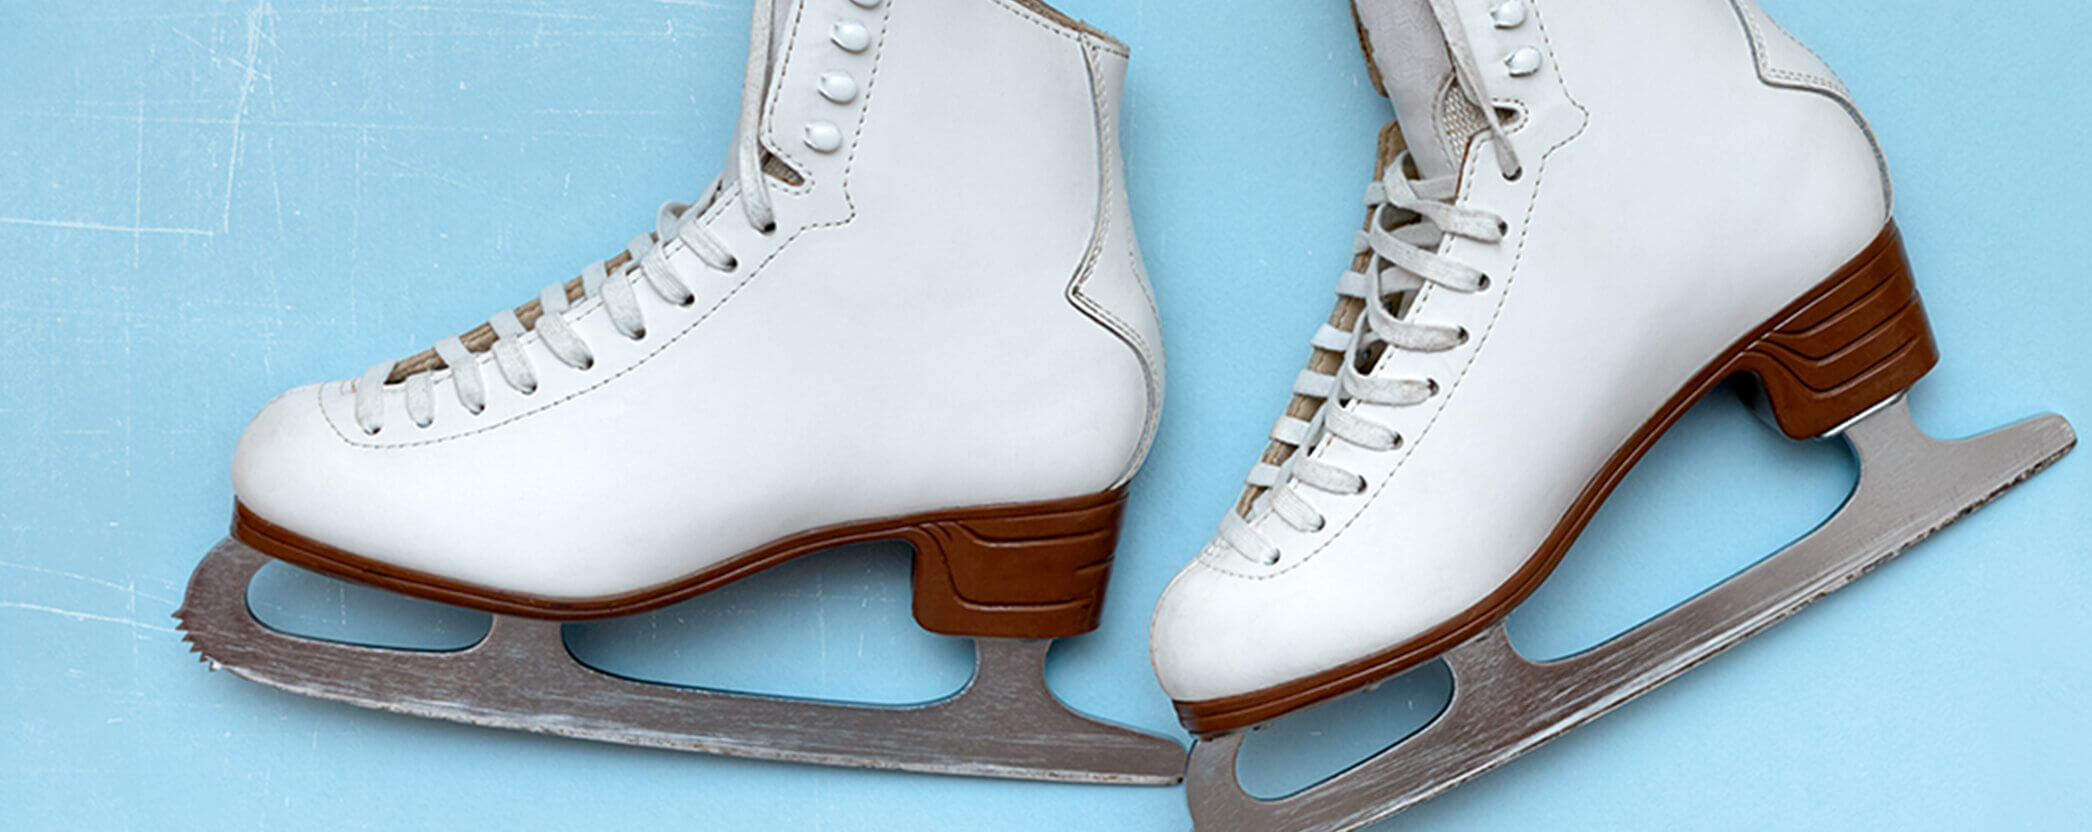 ice skates2x